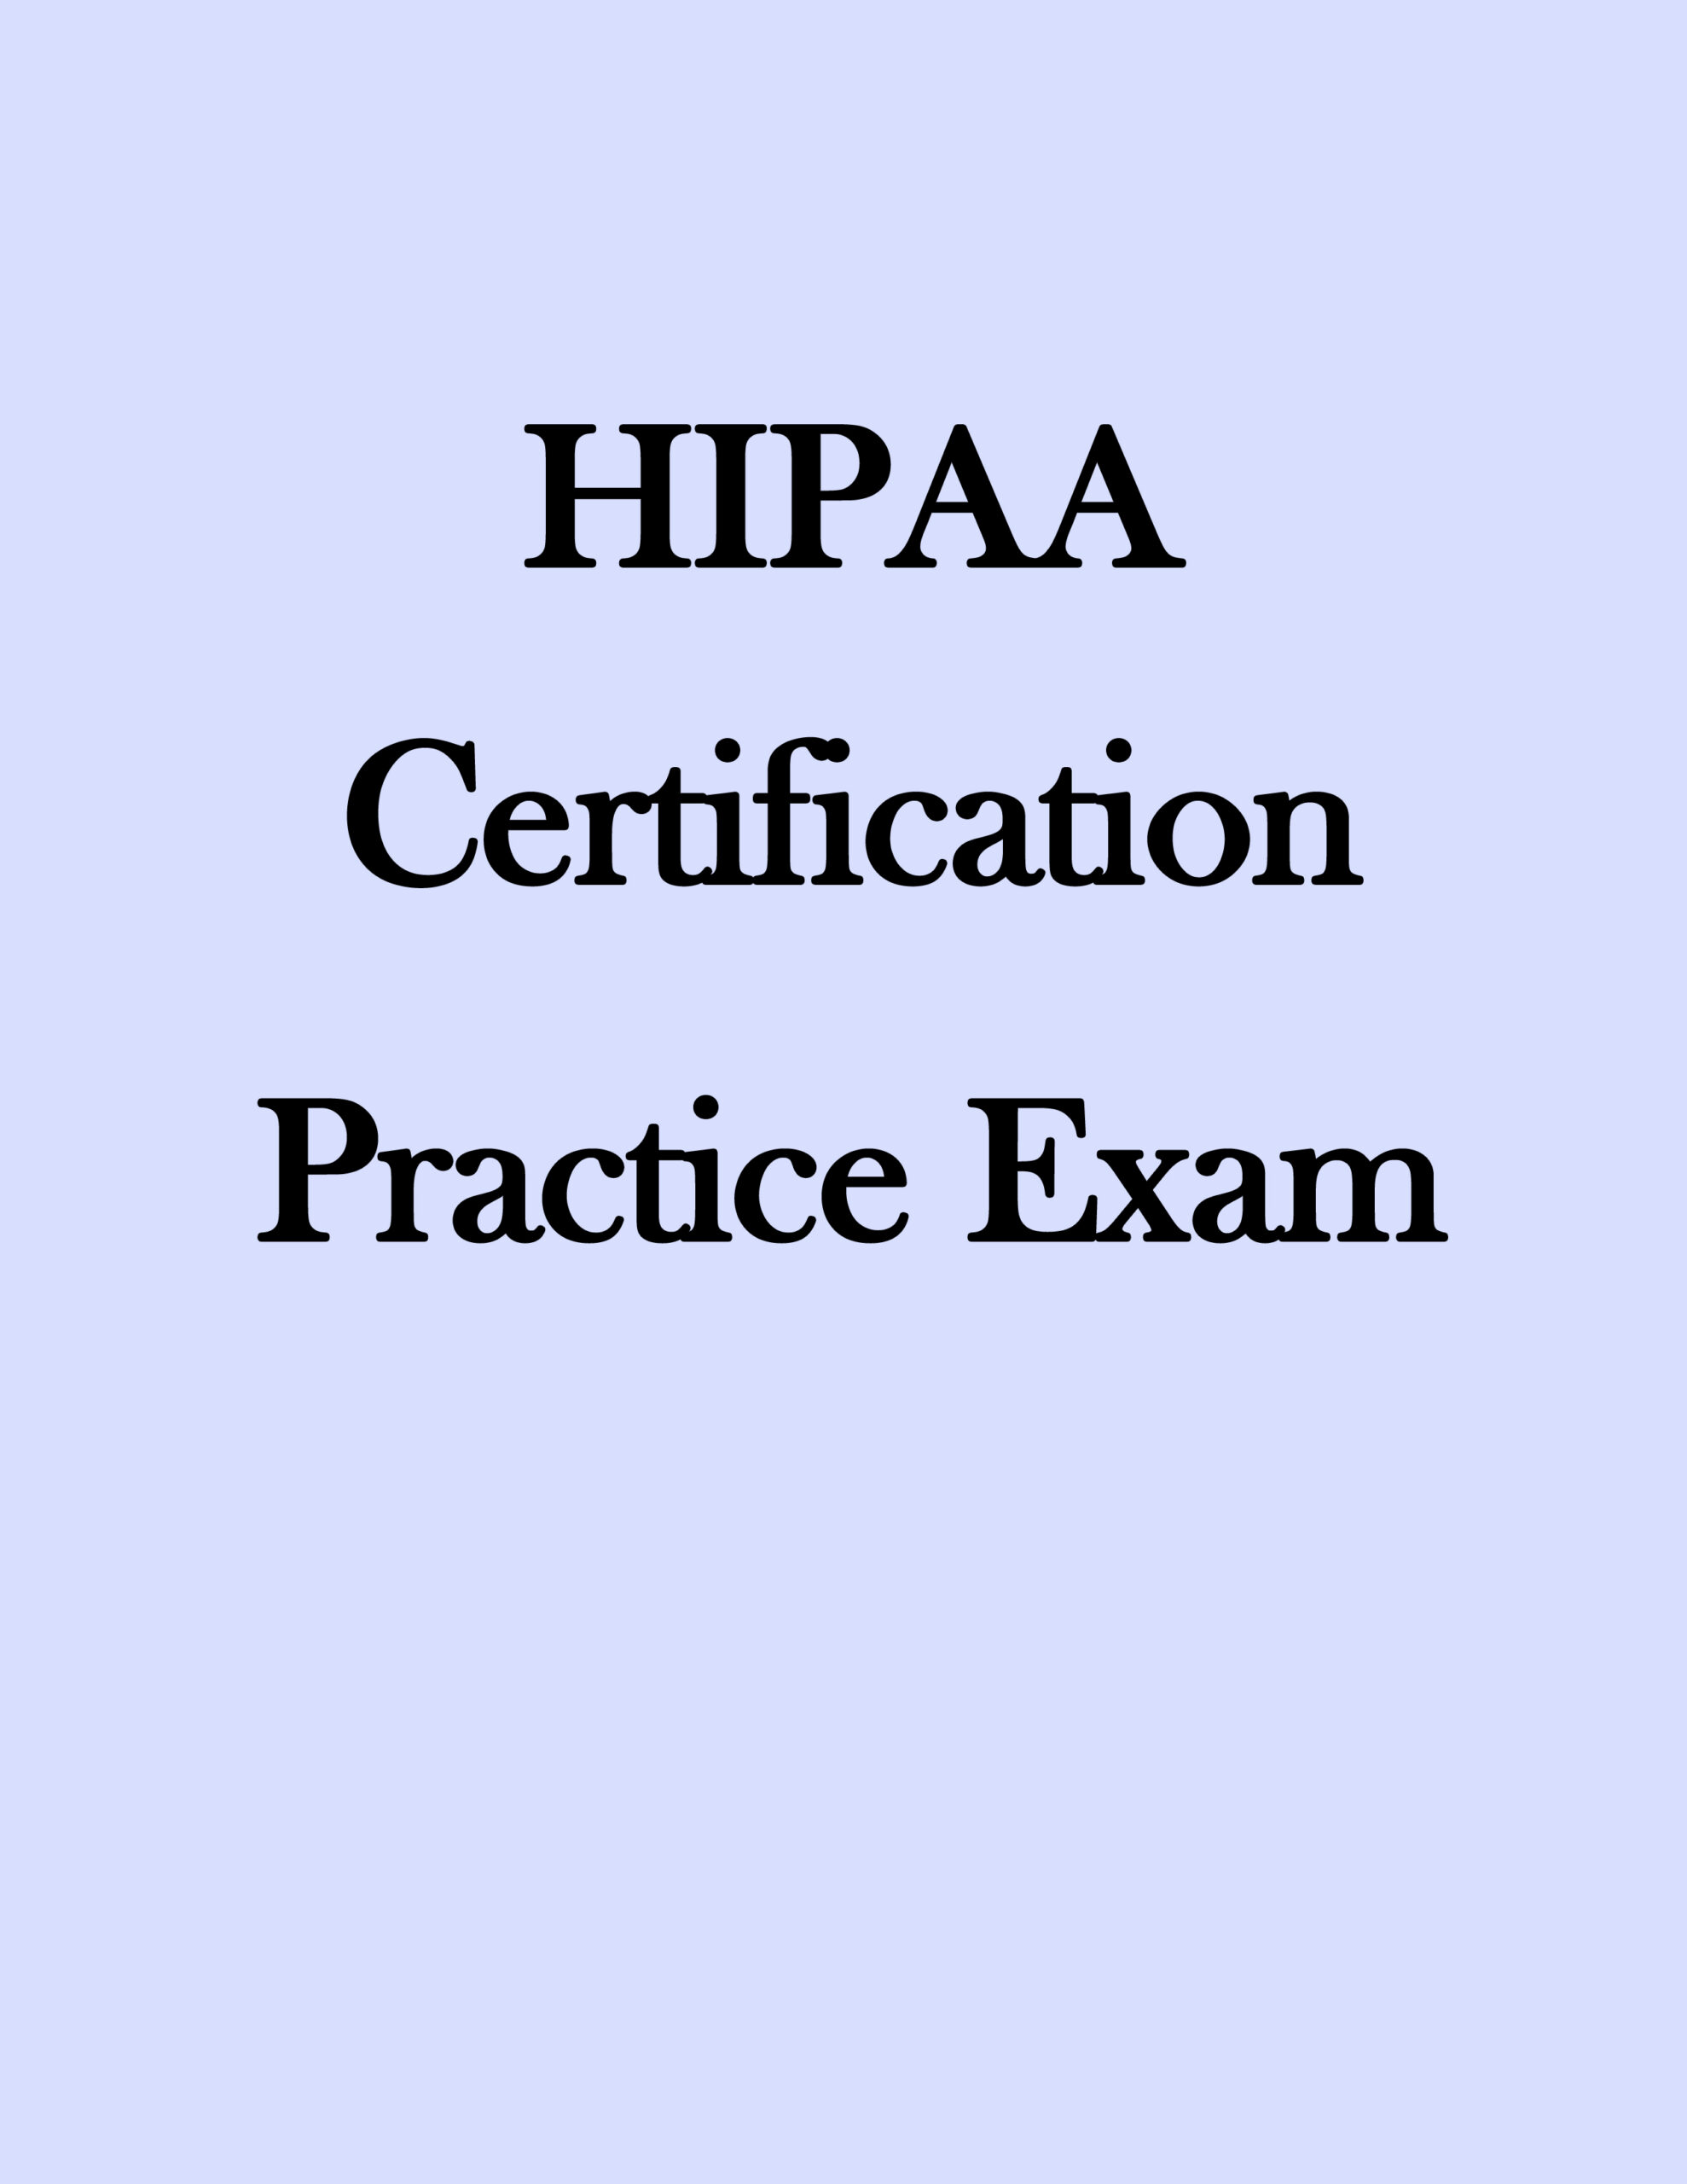 HIPAA Certification Practice Exam